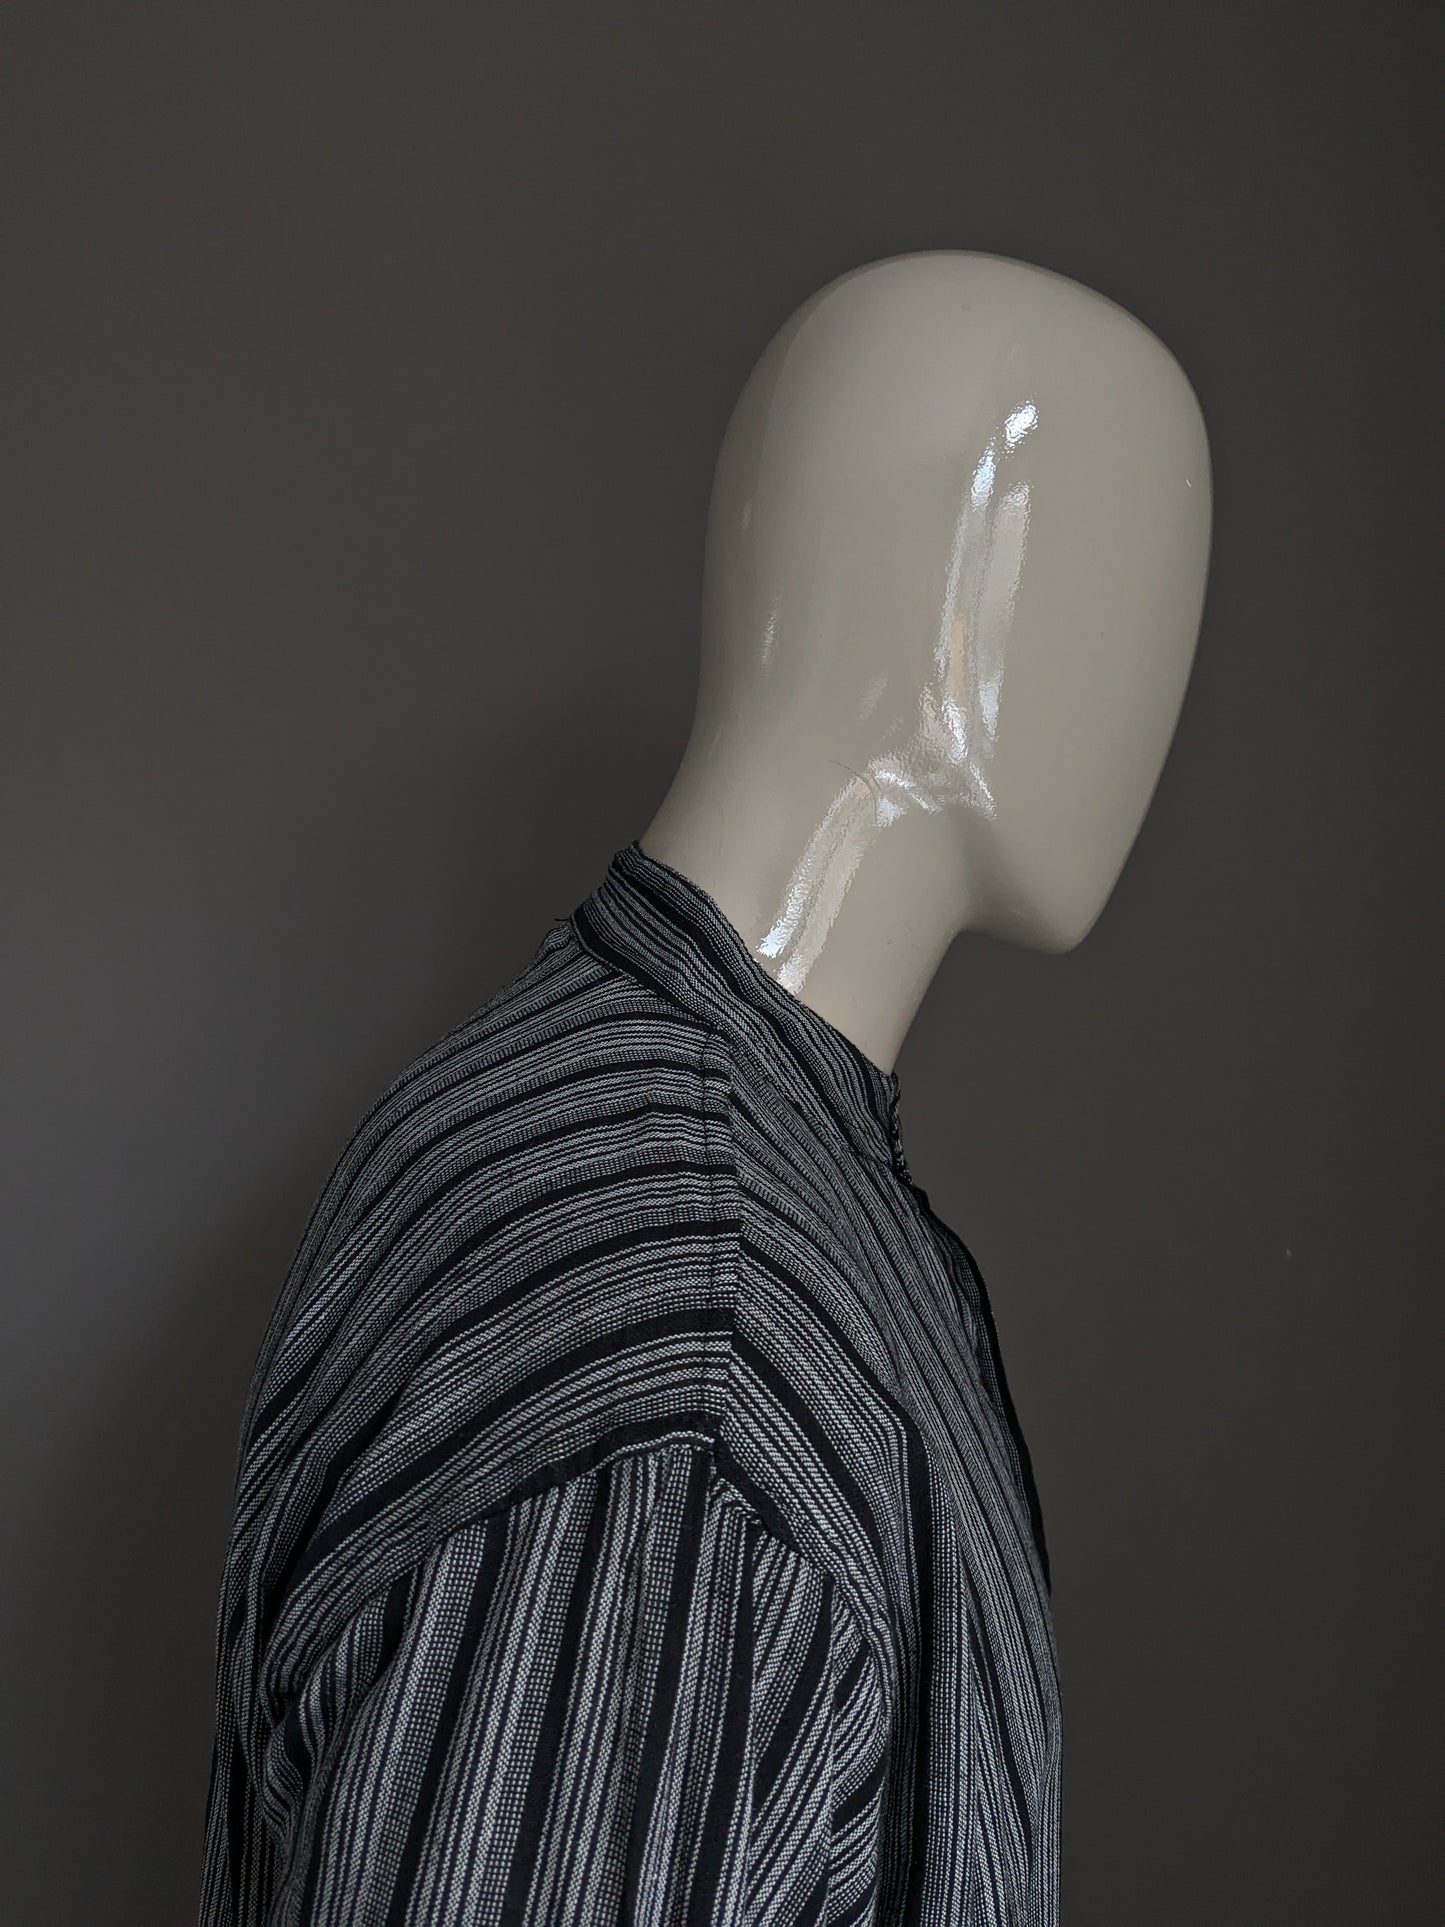 Suéter de polo Yuli Vintage con collar elevado / granjeros / mao. Gris negro rayado con bolsa. Tamaño xl.